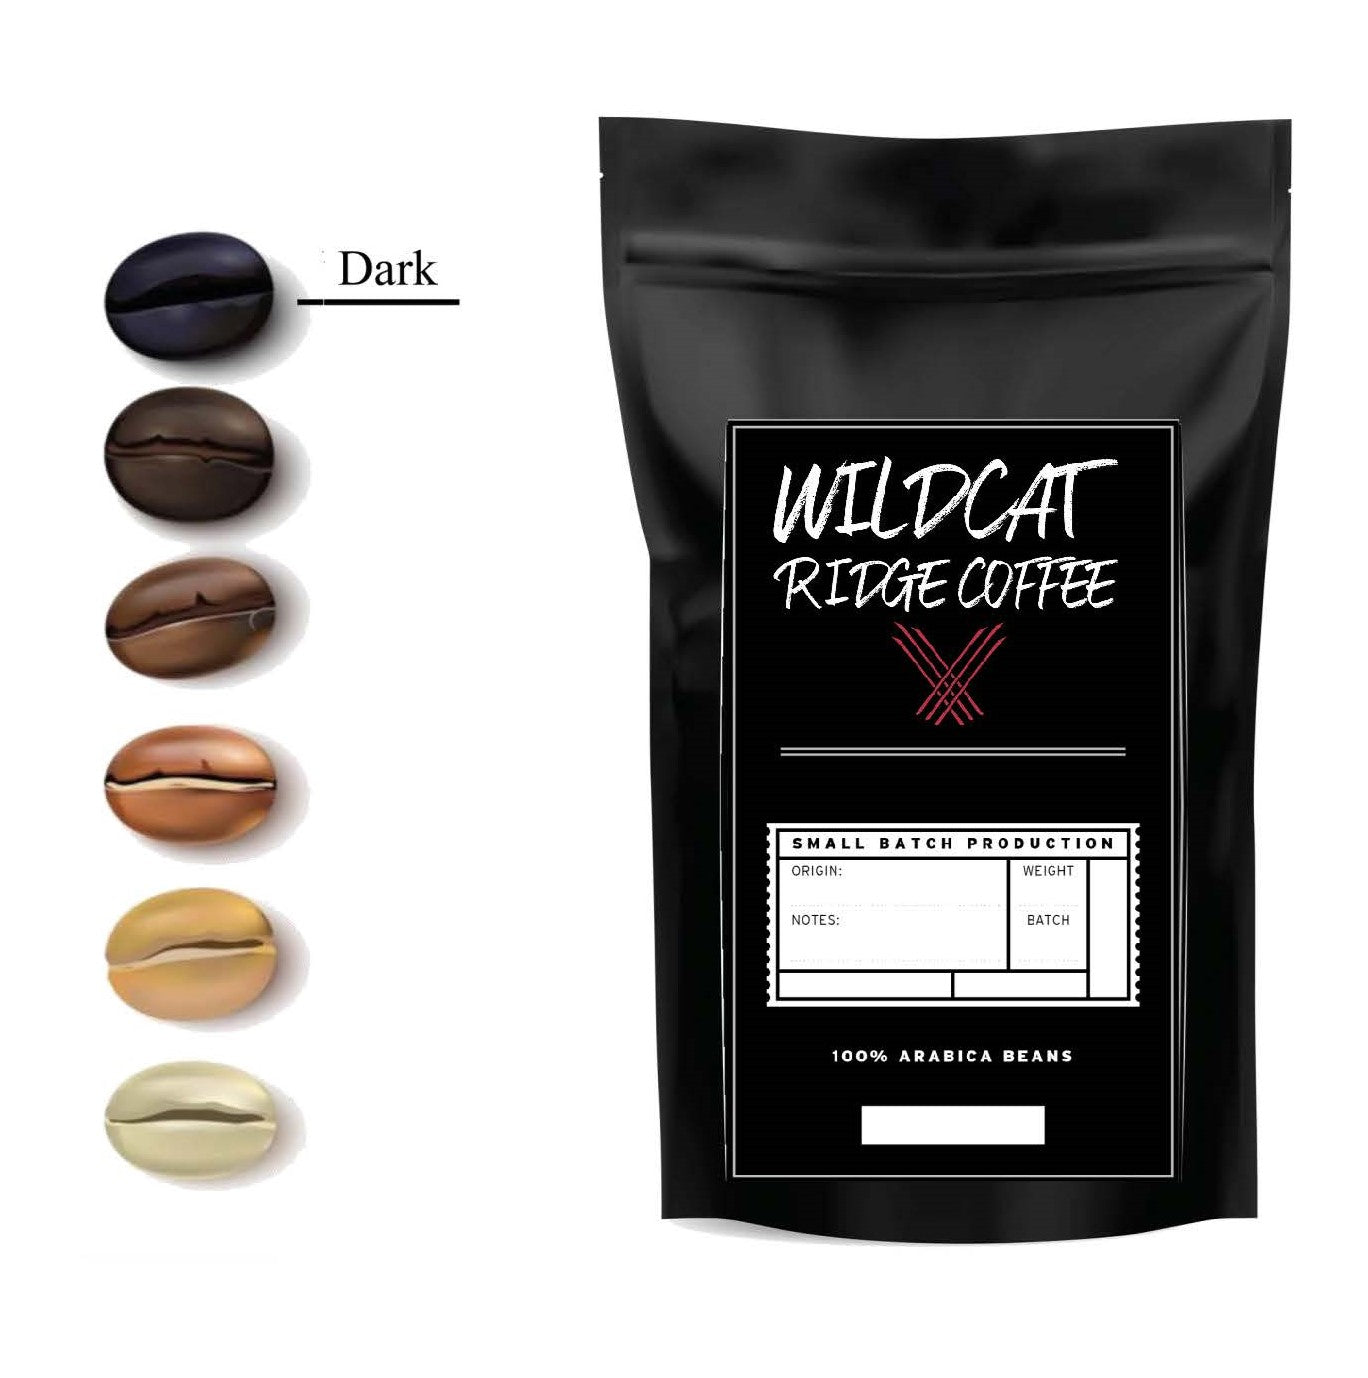 Espresso Blend - Wildcat Ridge Coffee Espressos